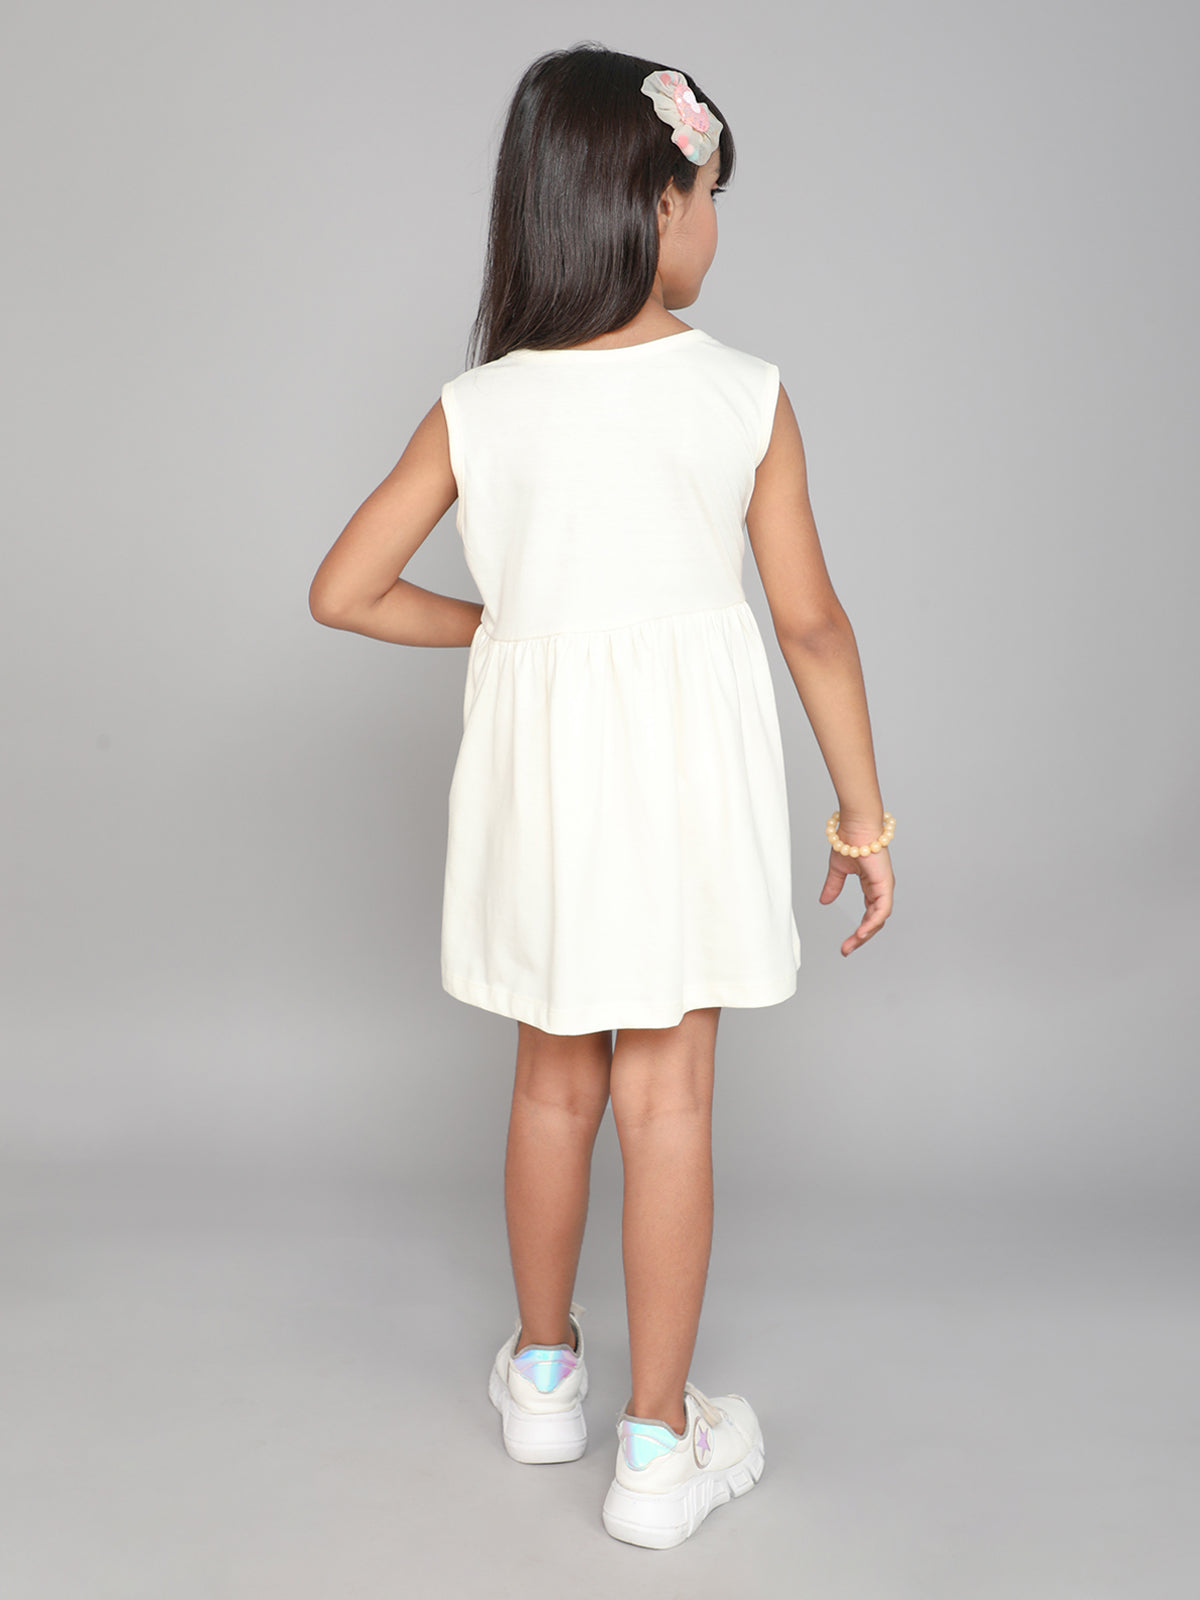 Printed Sleeveless Cream Dress for girls